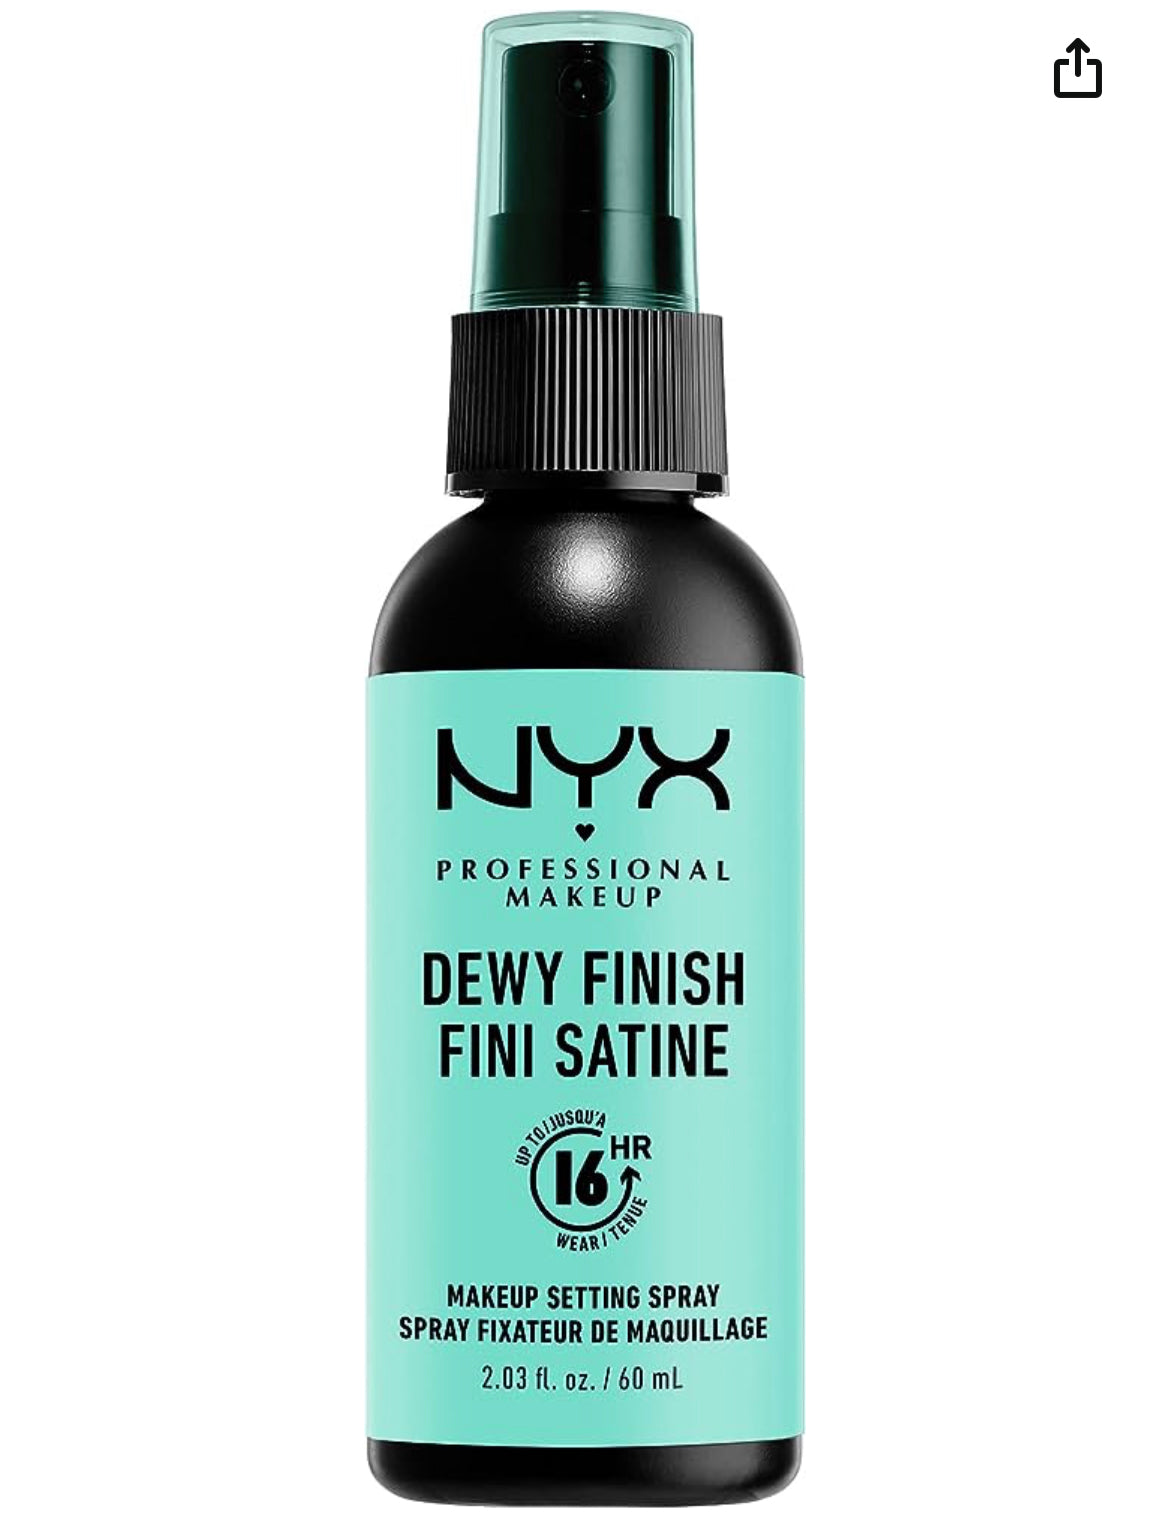 Nyx setting spray